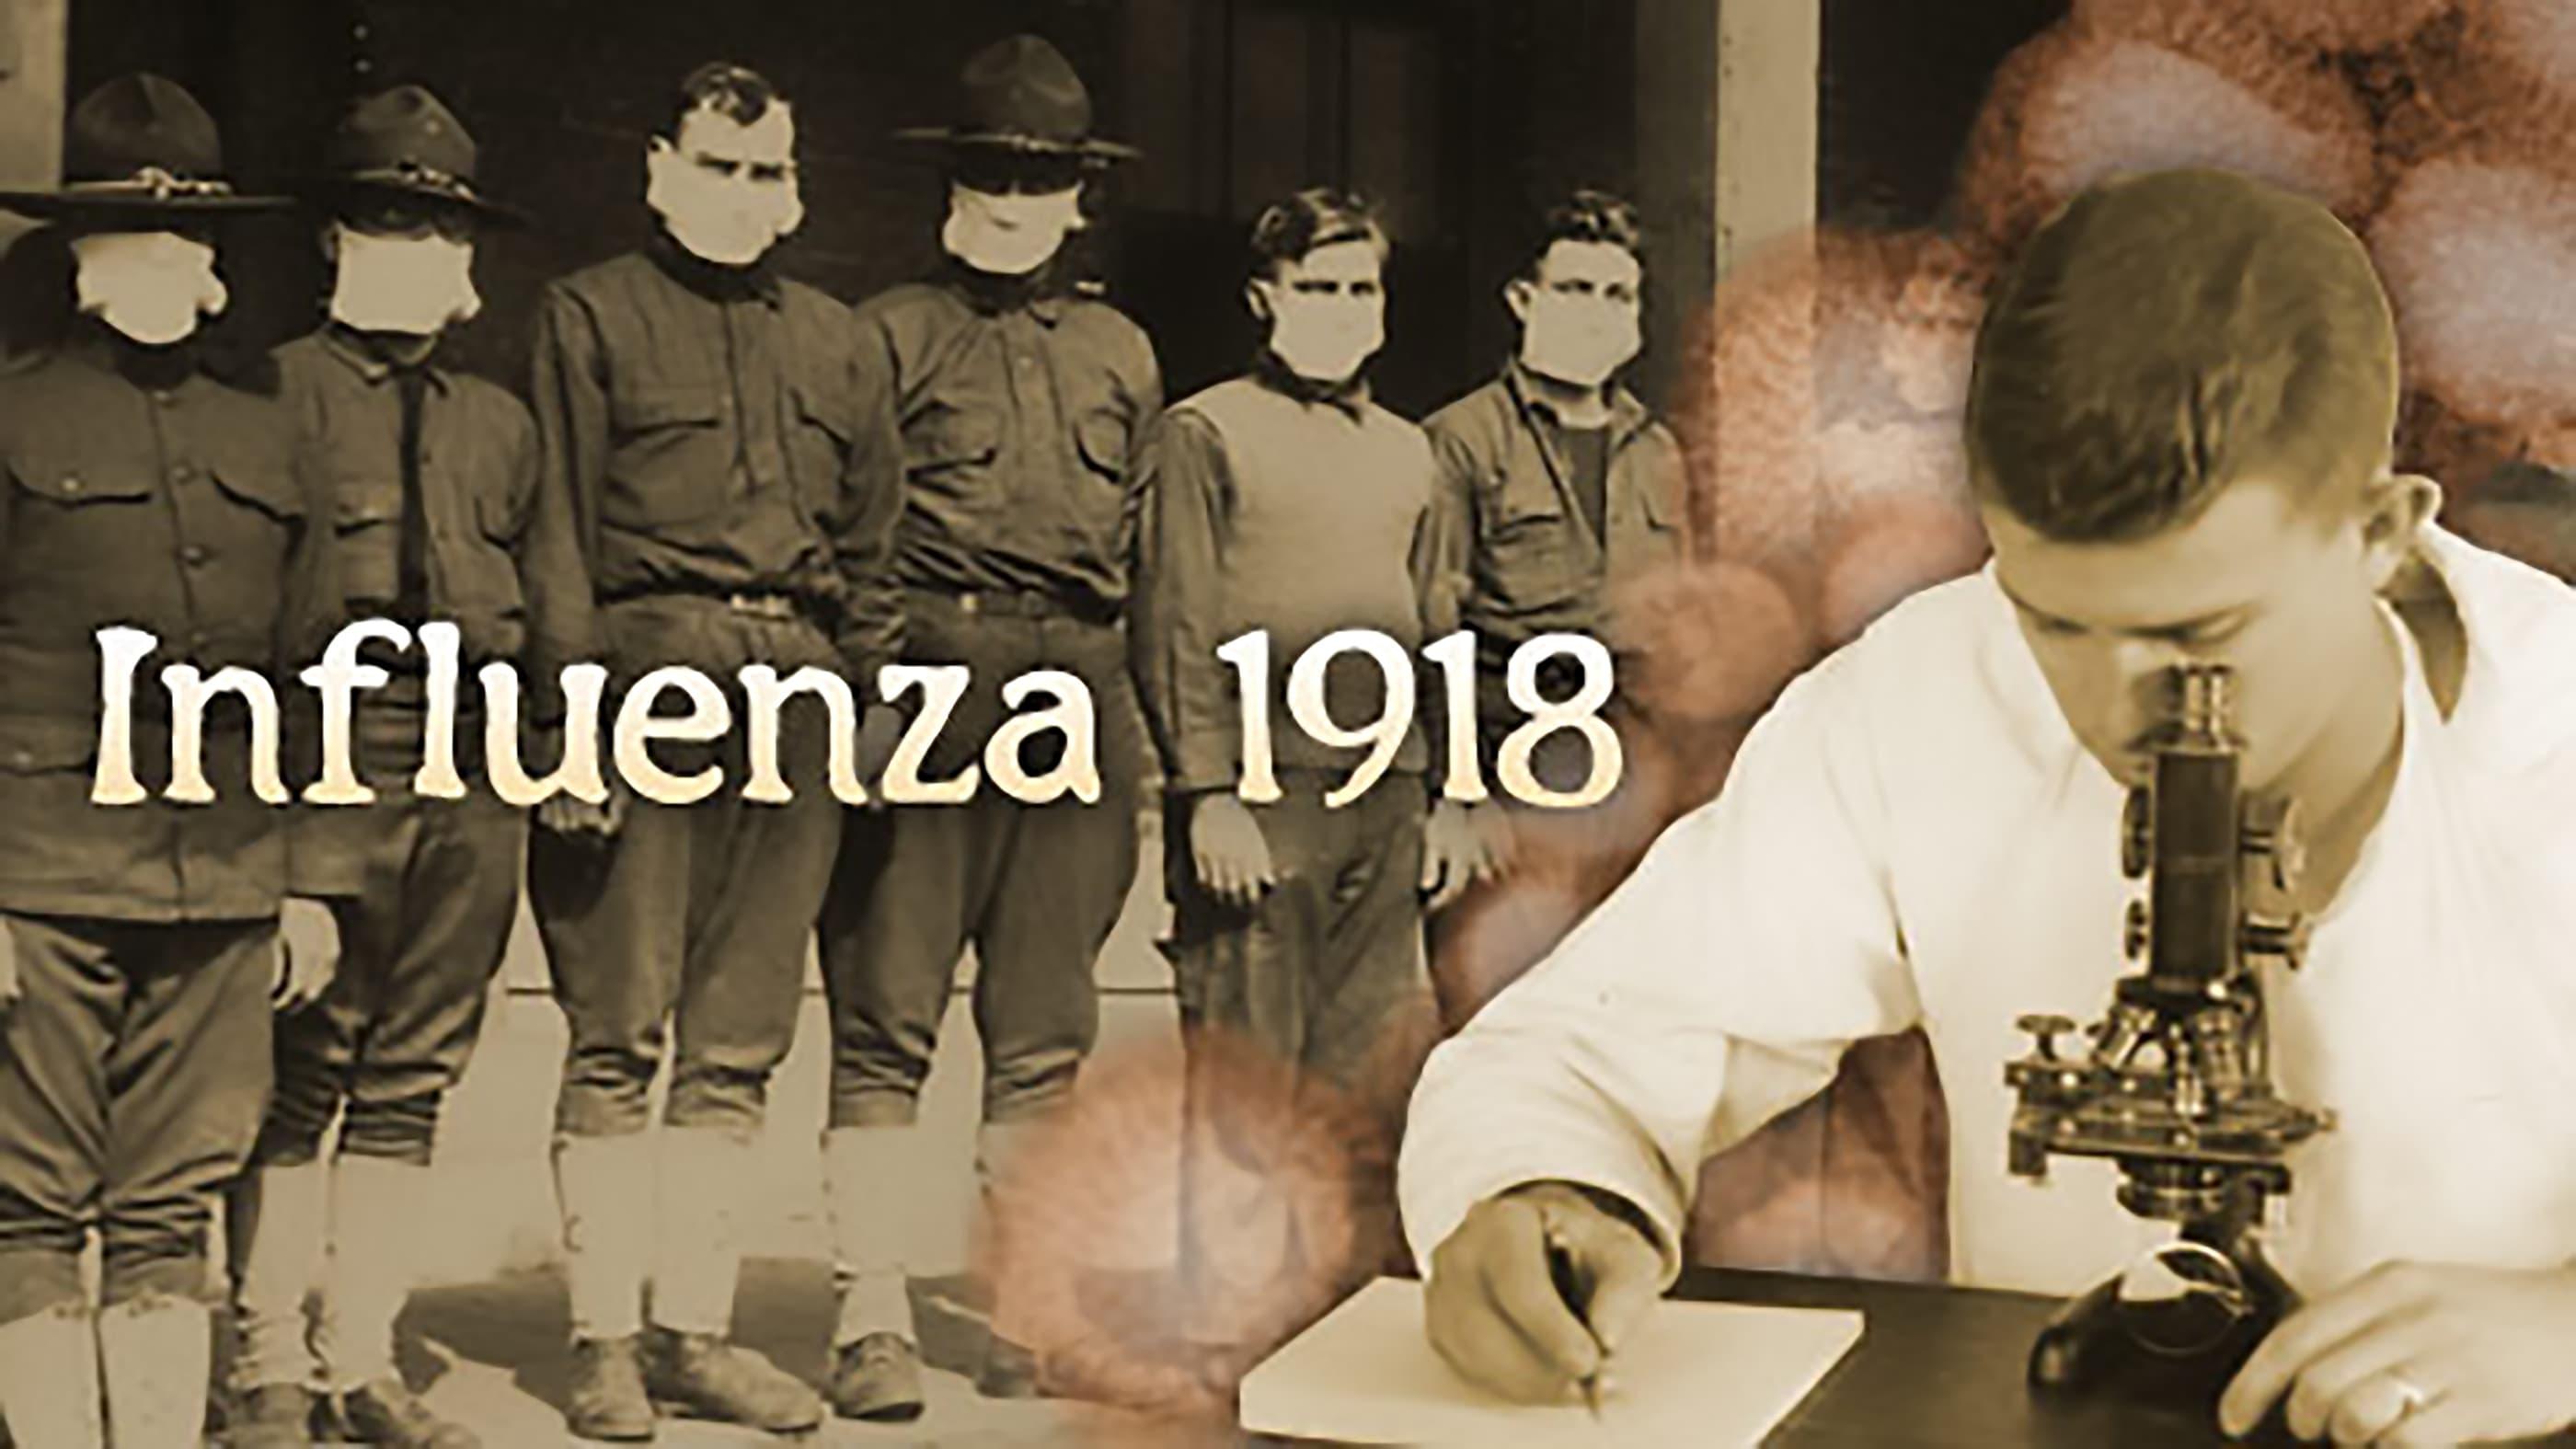 Influenza 1918 backdrop